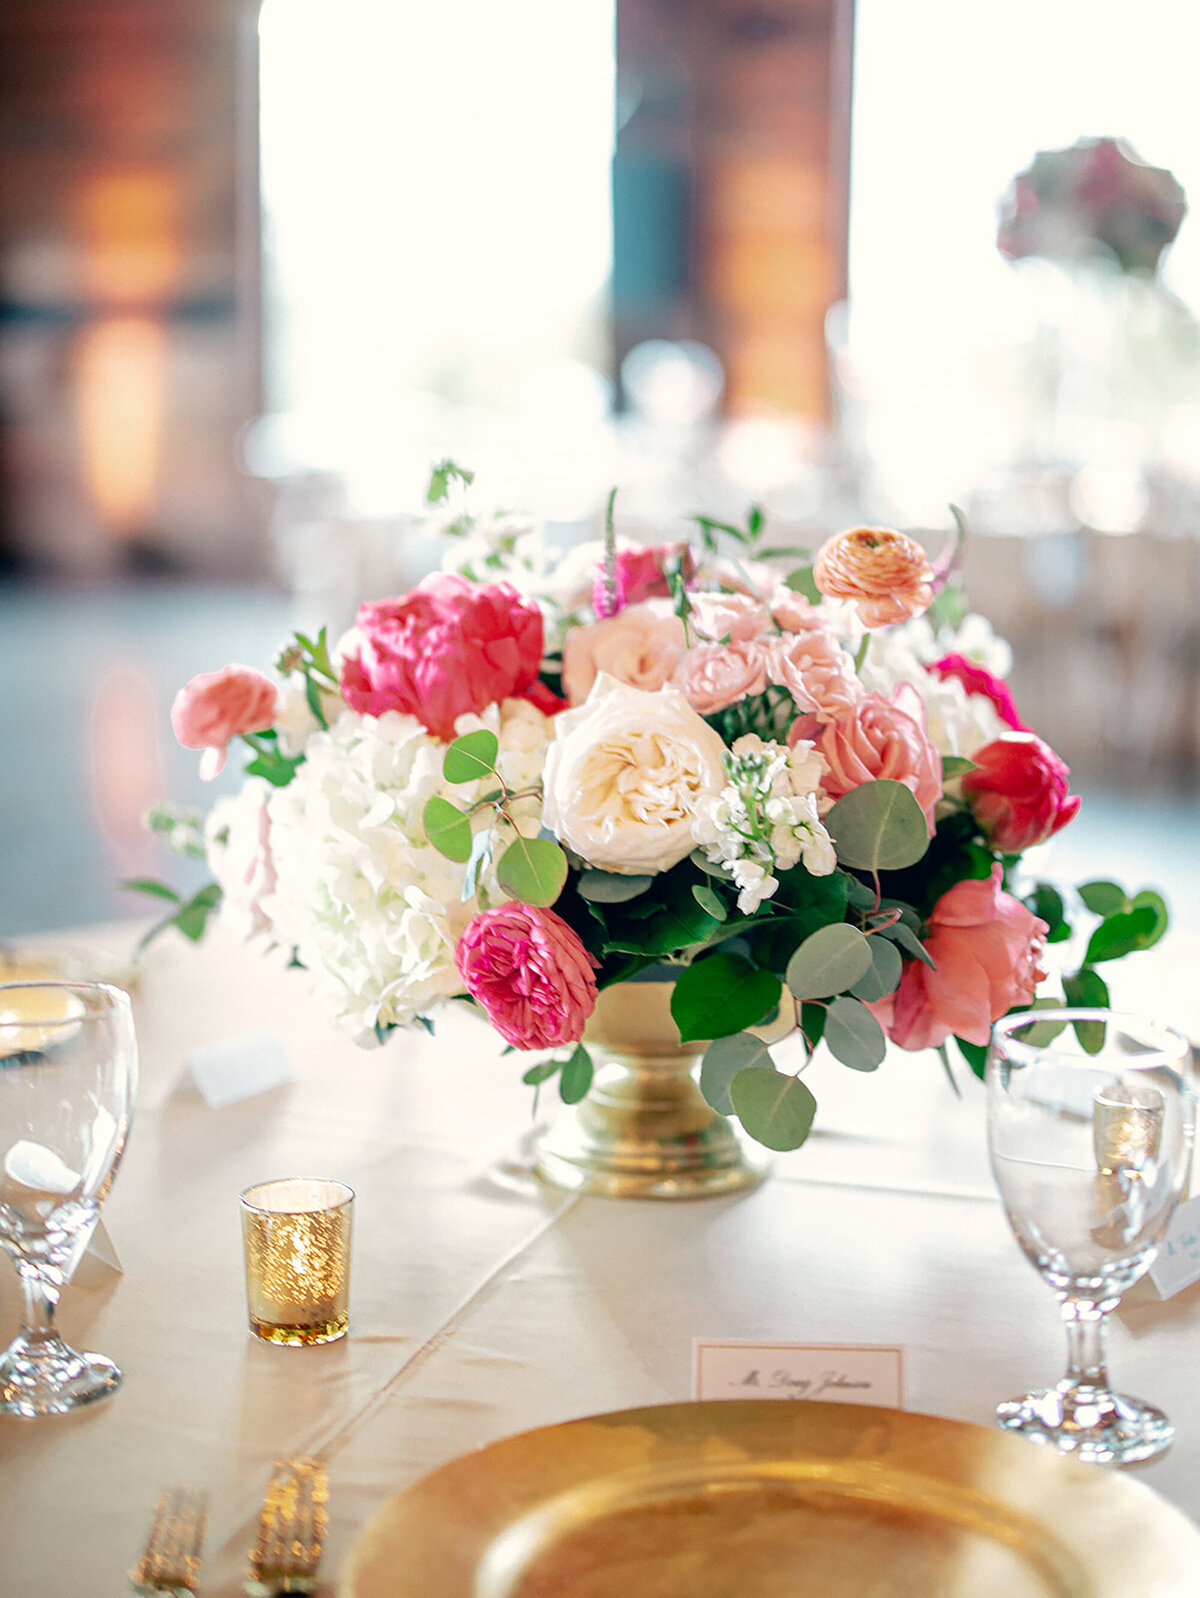 DFW Floral & Event Design by Petals Couture